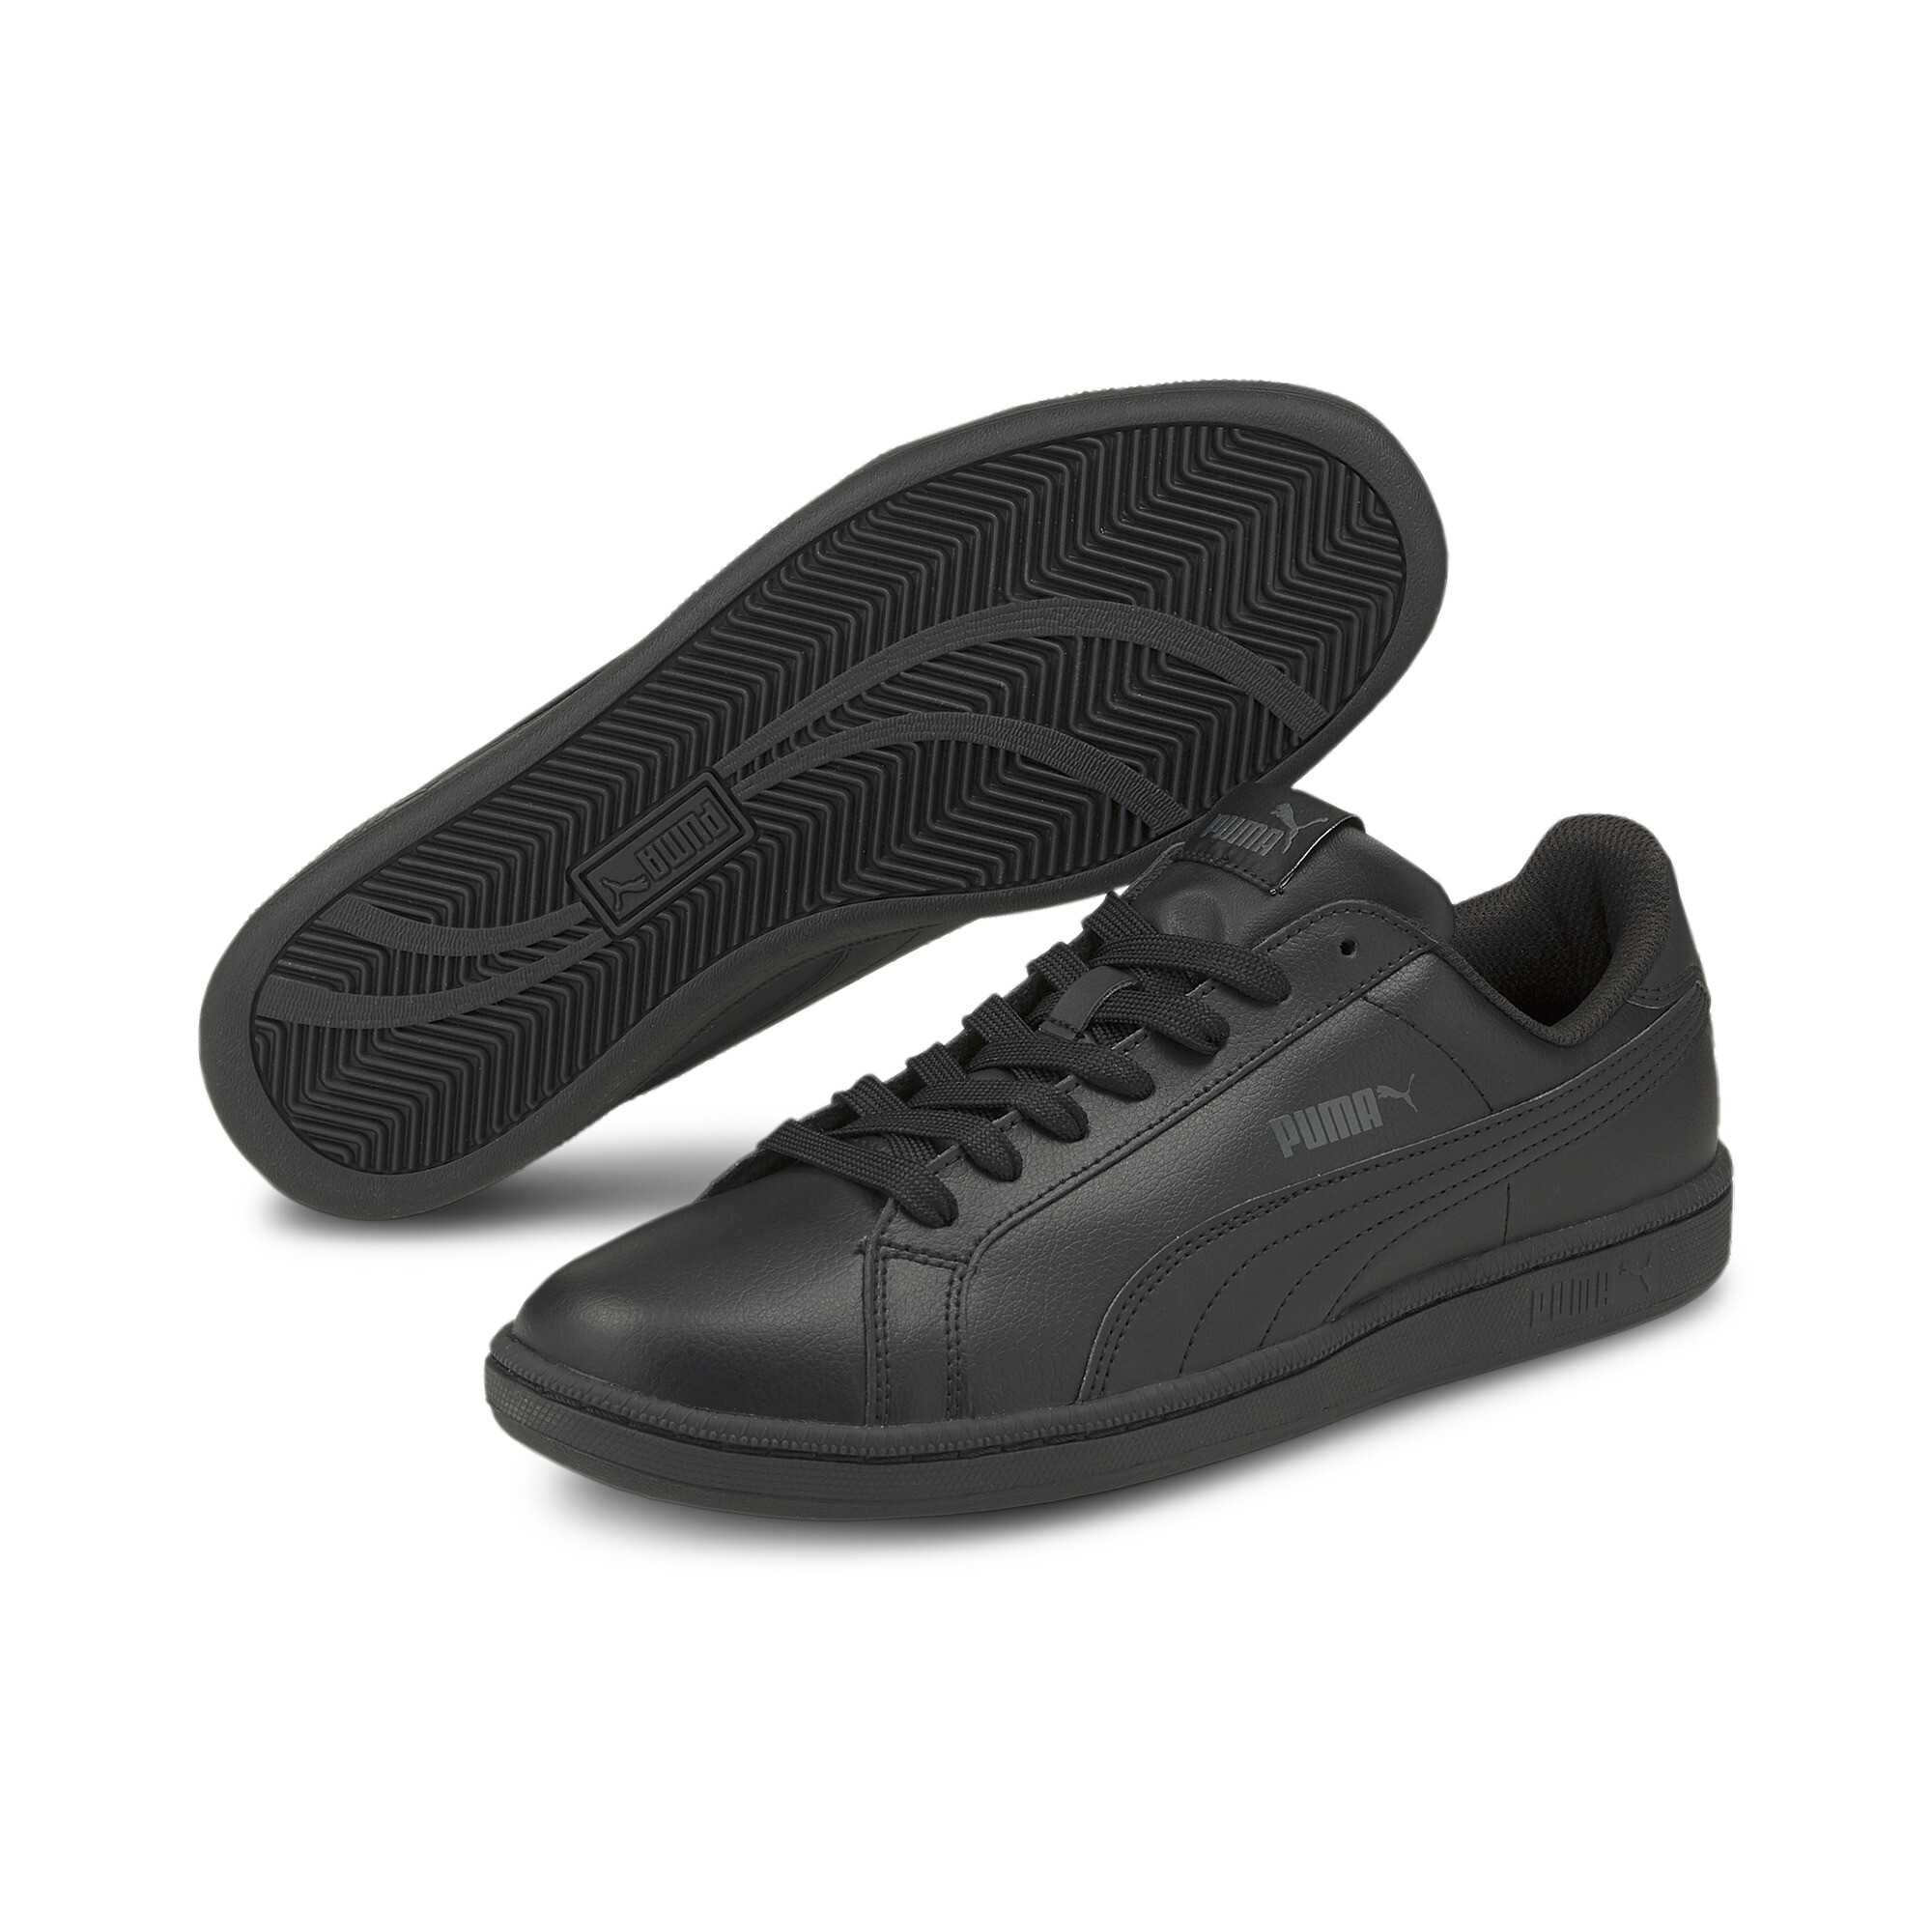 Indexbild 2 - PUMA Smash Trainers Schuhe Sneakers Sport Classics Unisex Neu